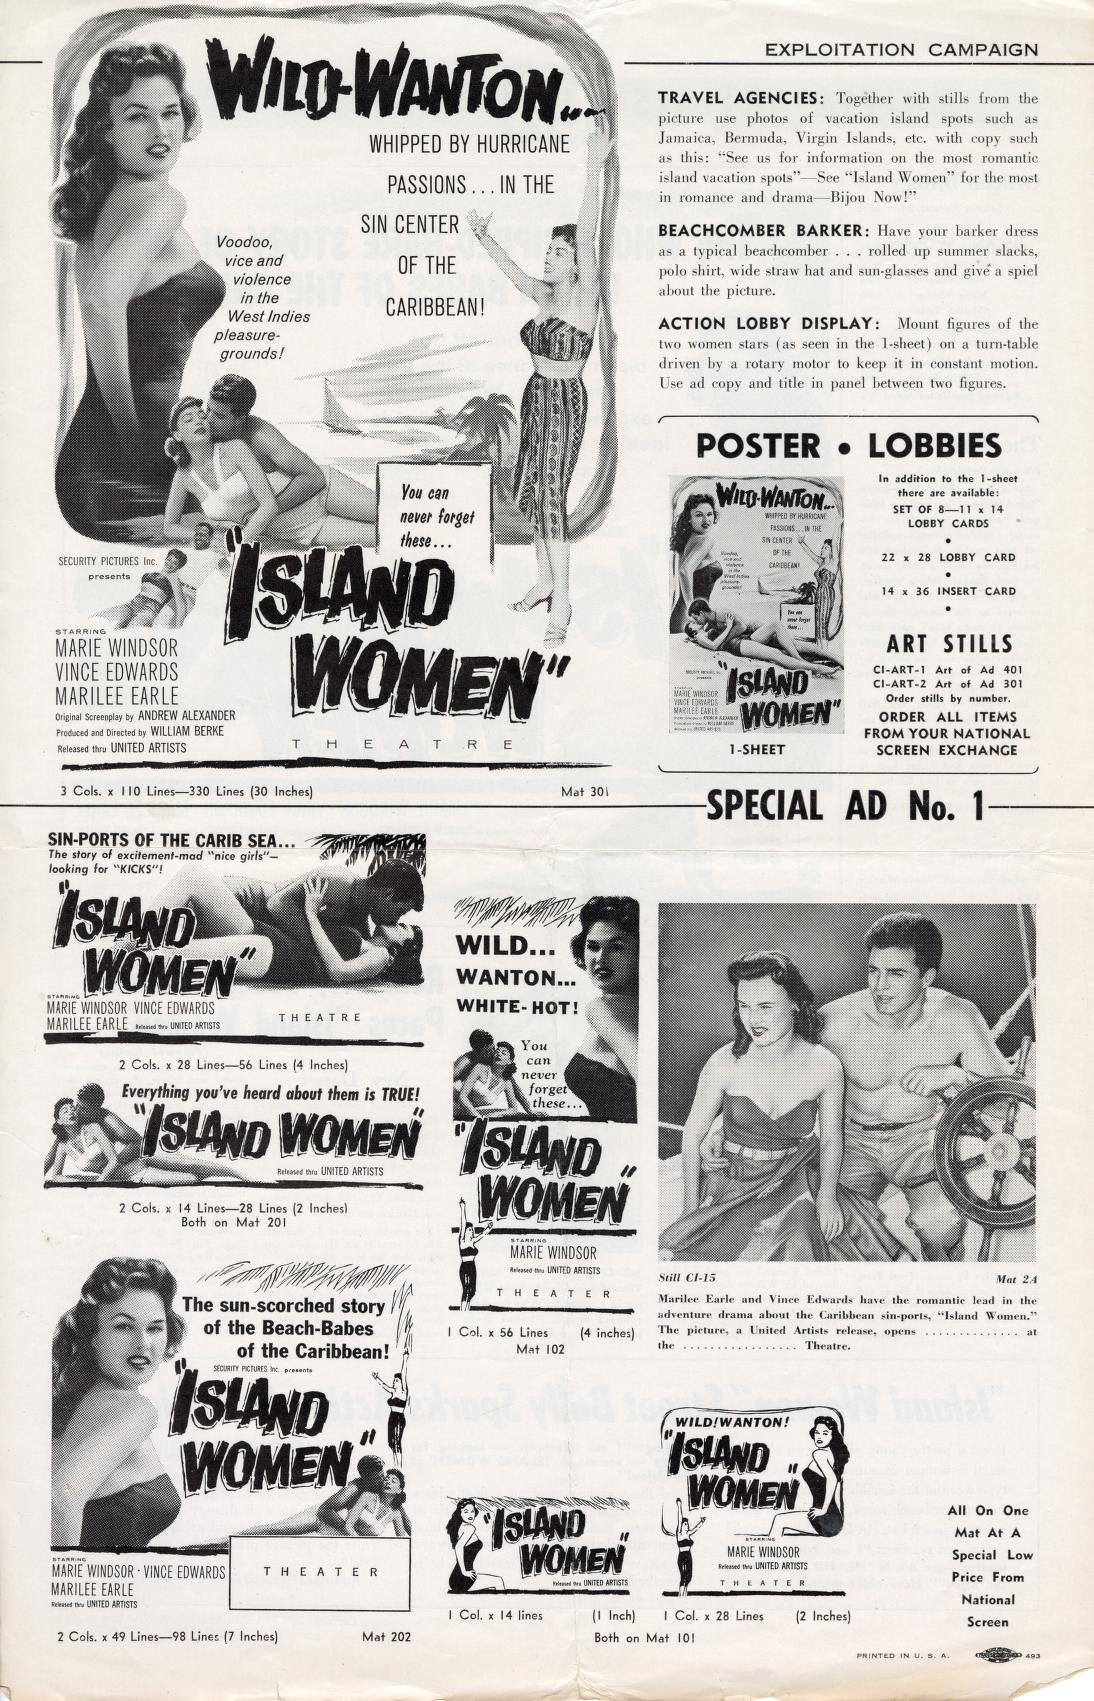 Island Women (United Artists Pressbook, 1958)